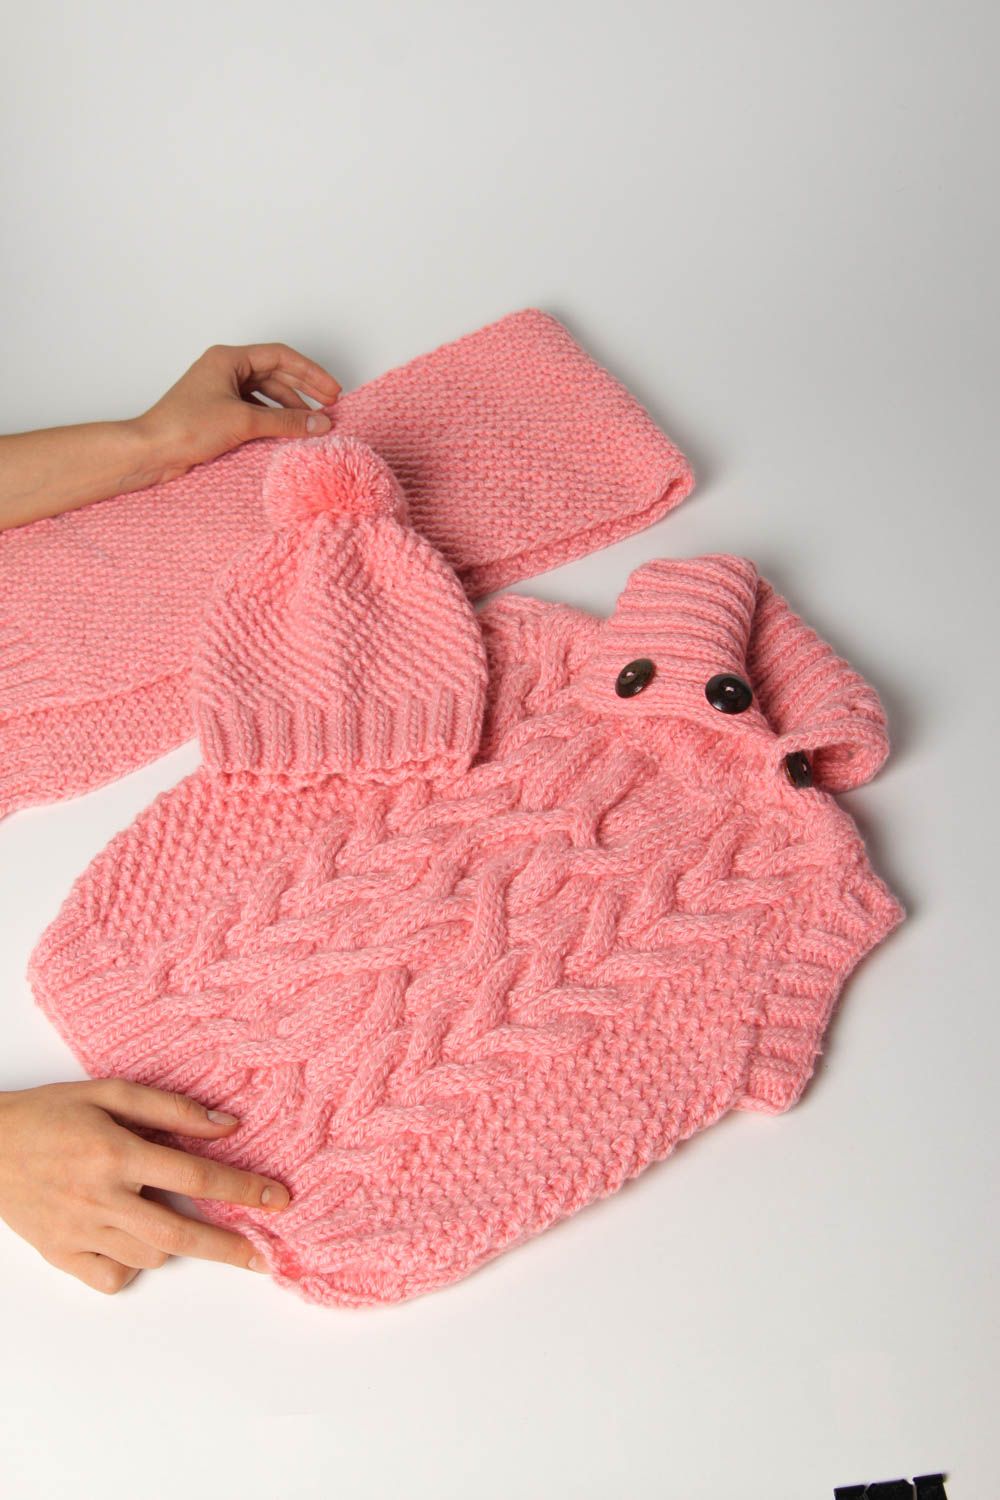 Designer vest pink winter scarf knitted hat handmade clothes for children photo 2